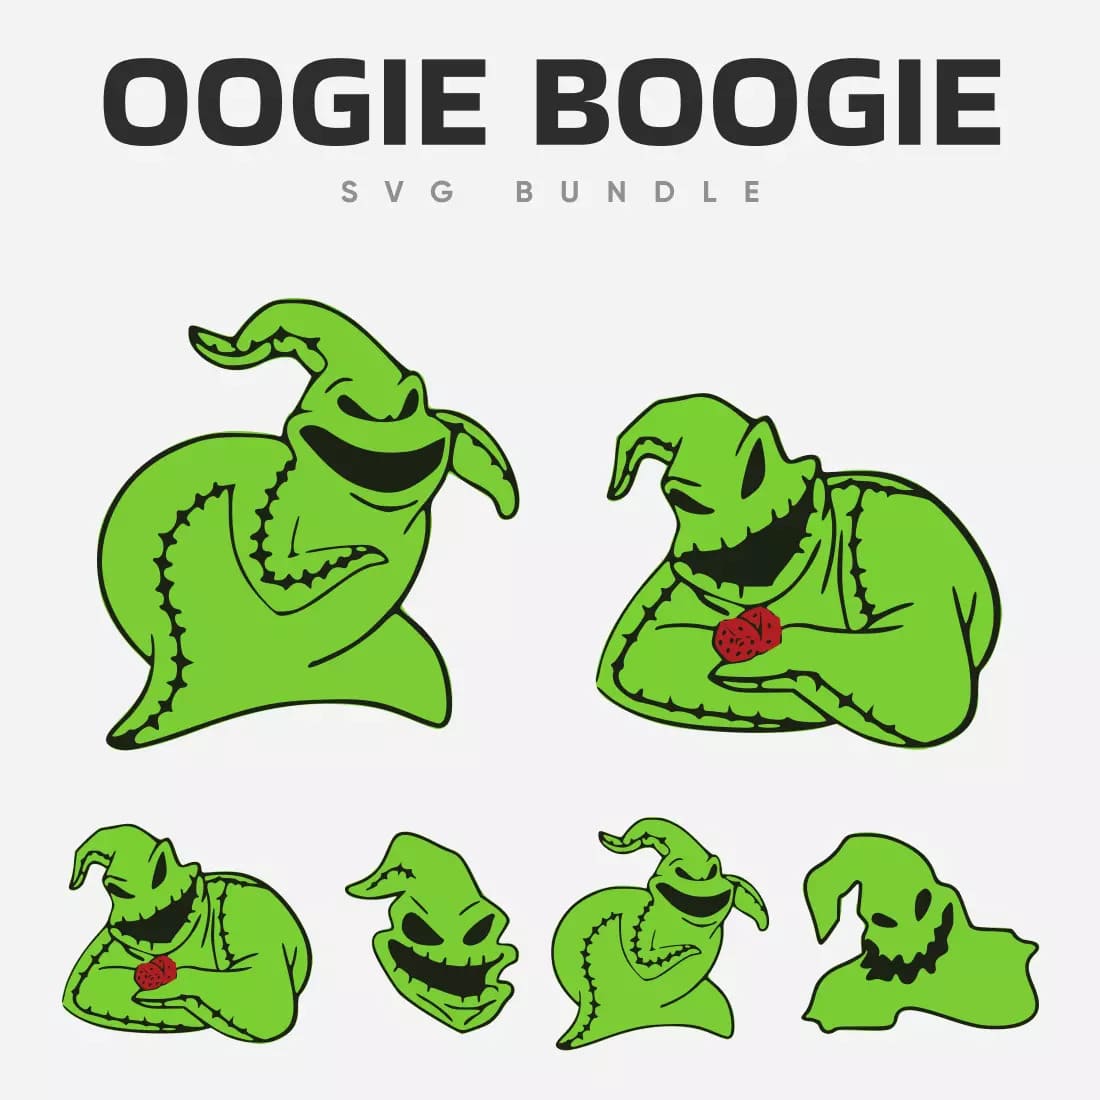 Oogie Boogie SVG Bundle Preview 4.